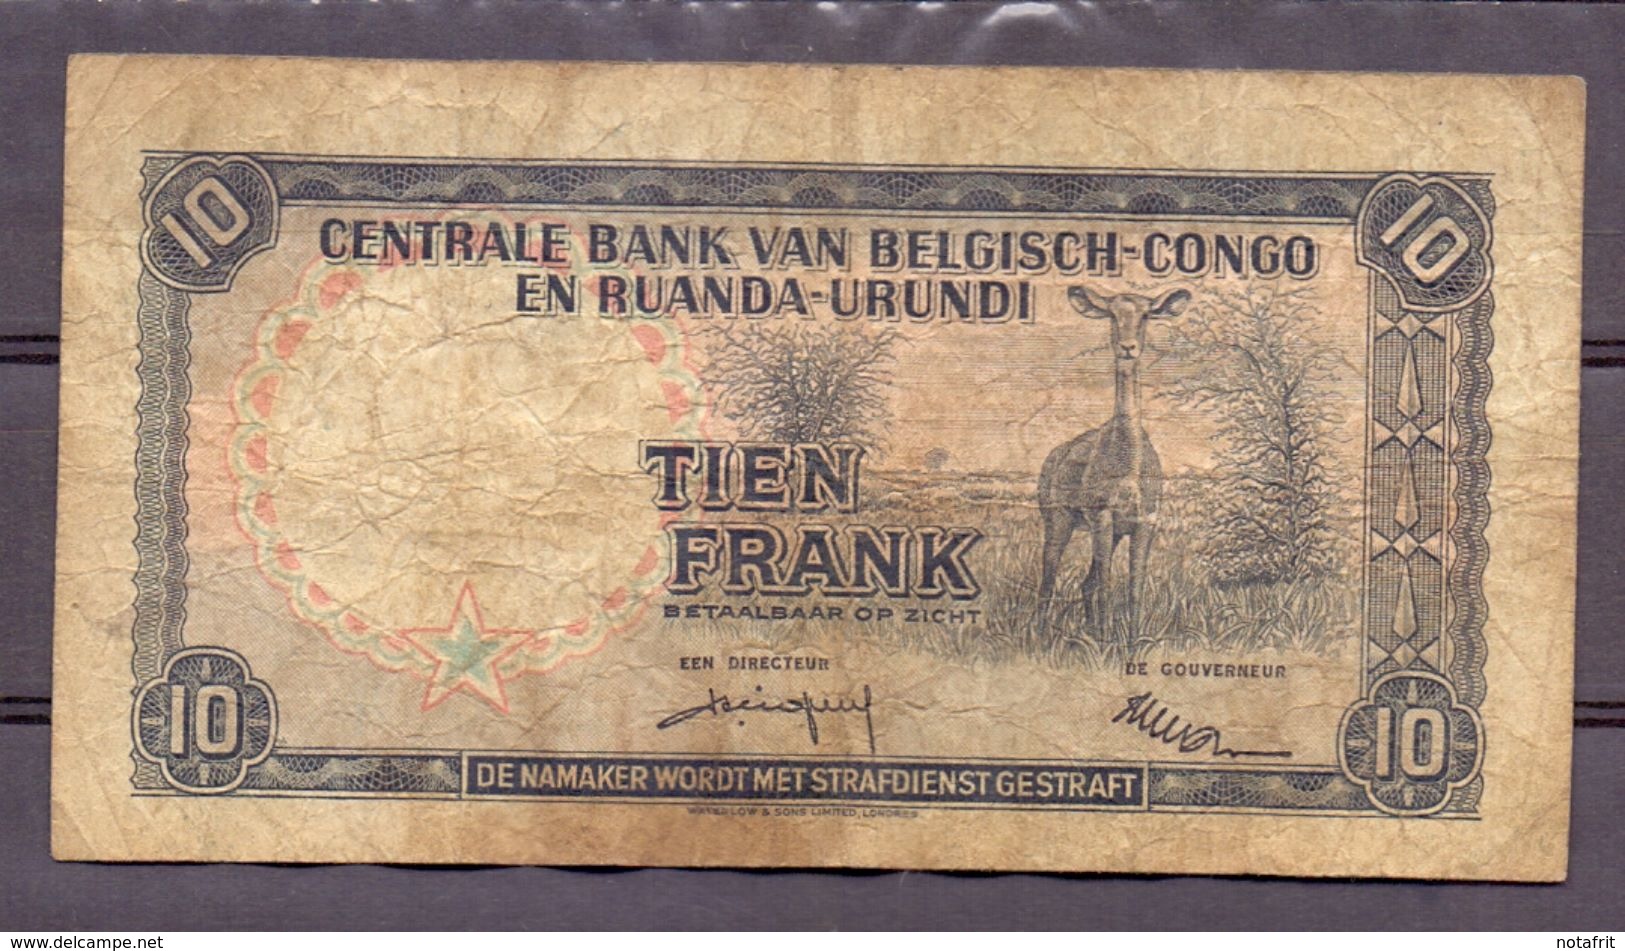 Belgian Congo Kongo 10 Fr 1957  VG - Belgian Congo Bank